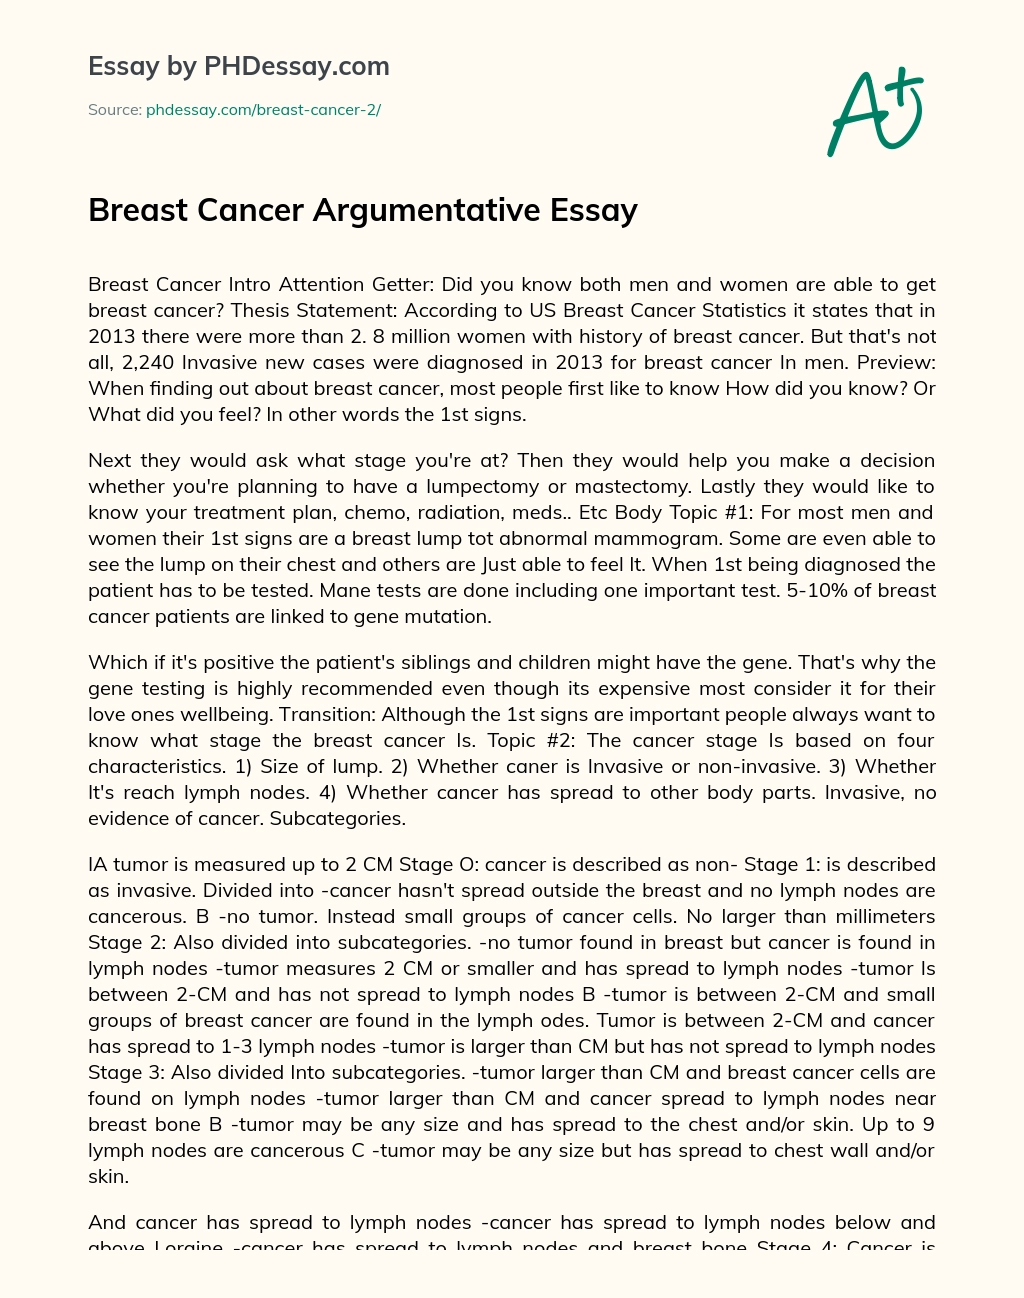 Breast Cancer Argumentative Essay essay